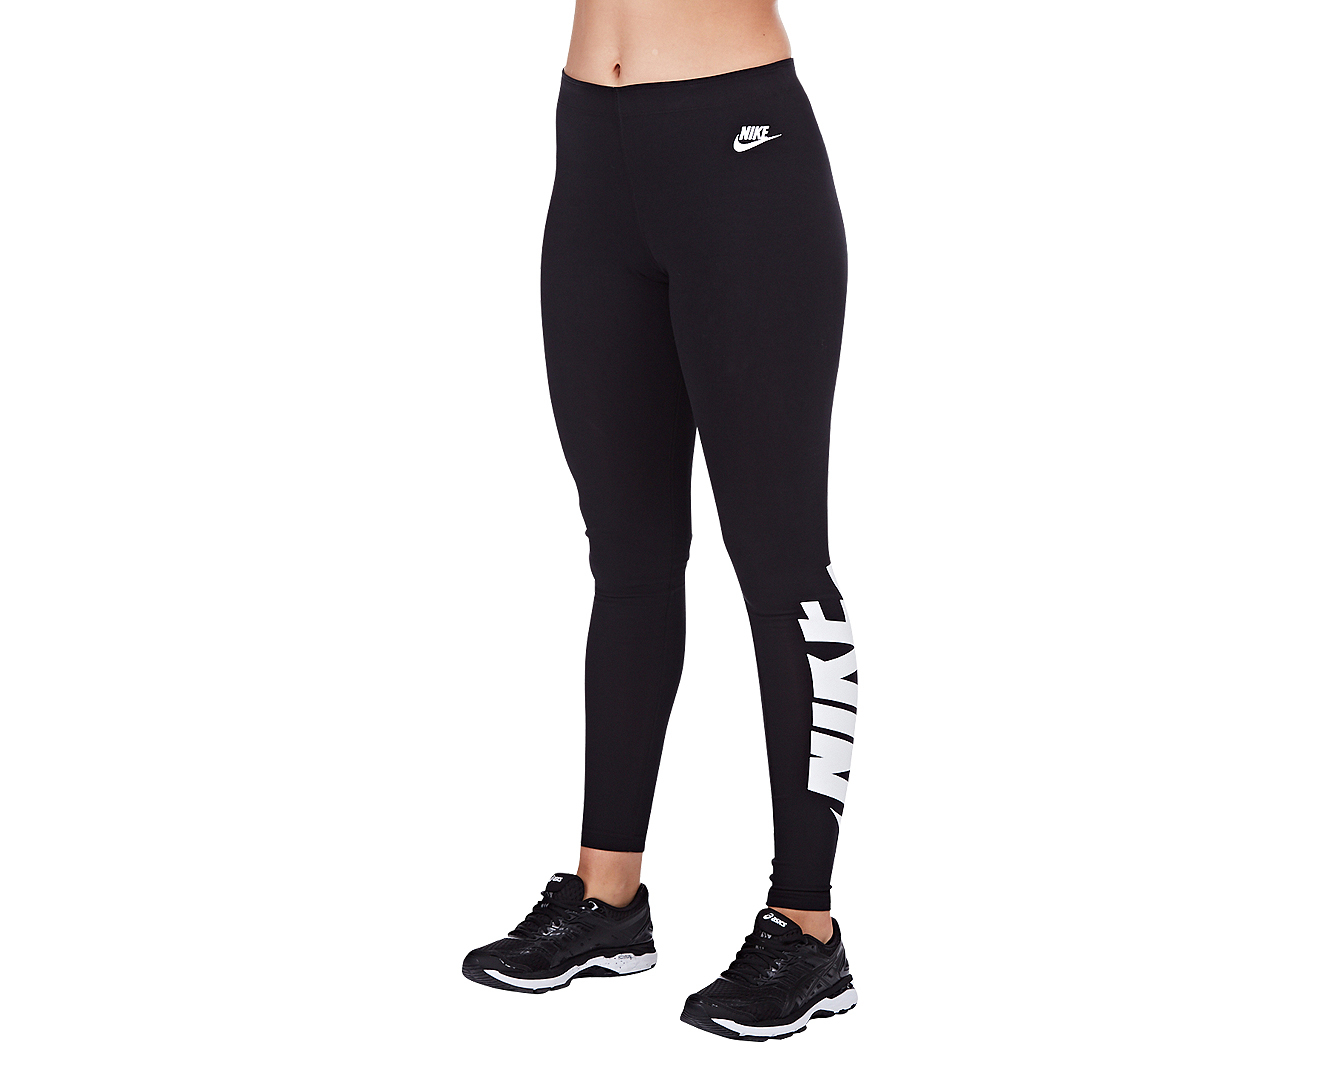 Nike Women's Sportswear Irreverent Legging - Black/White | Catch.com.au